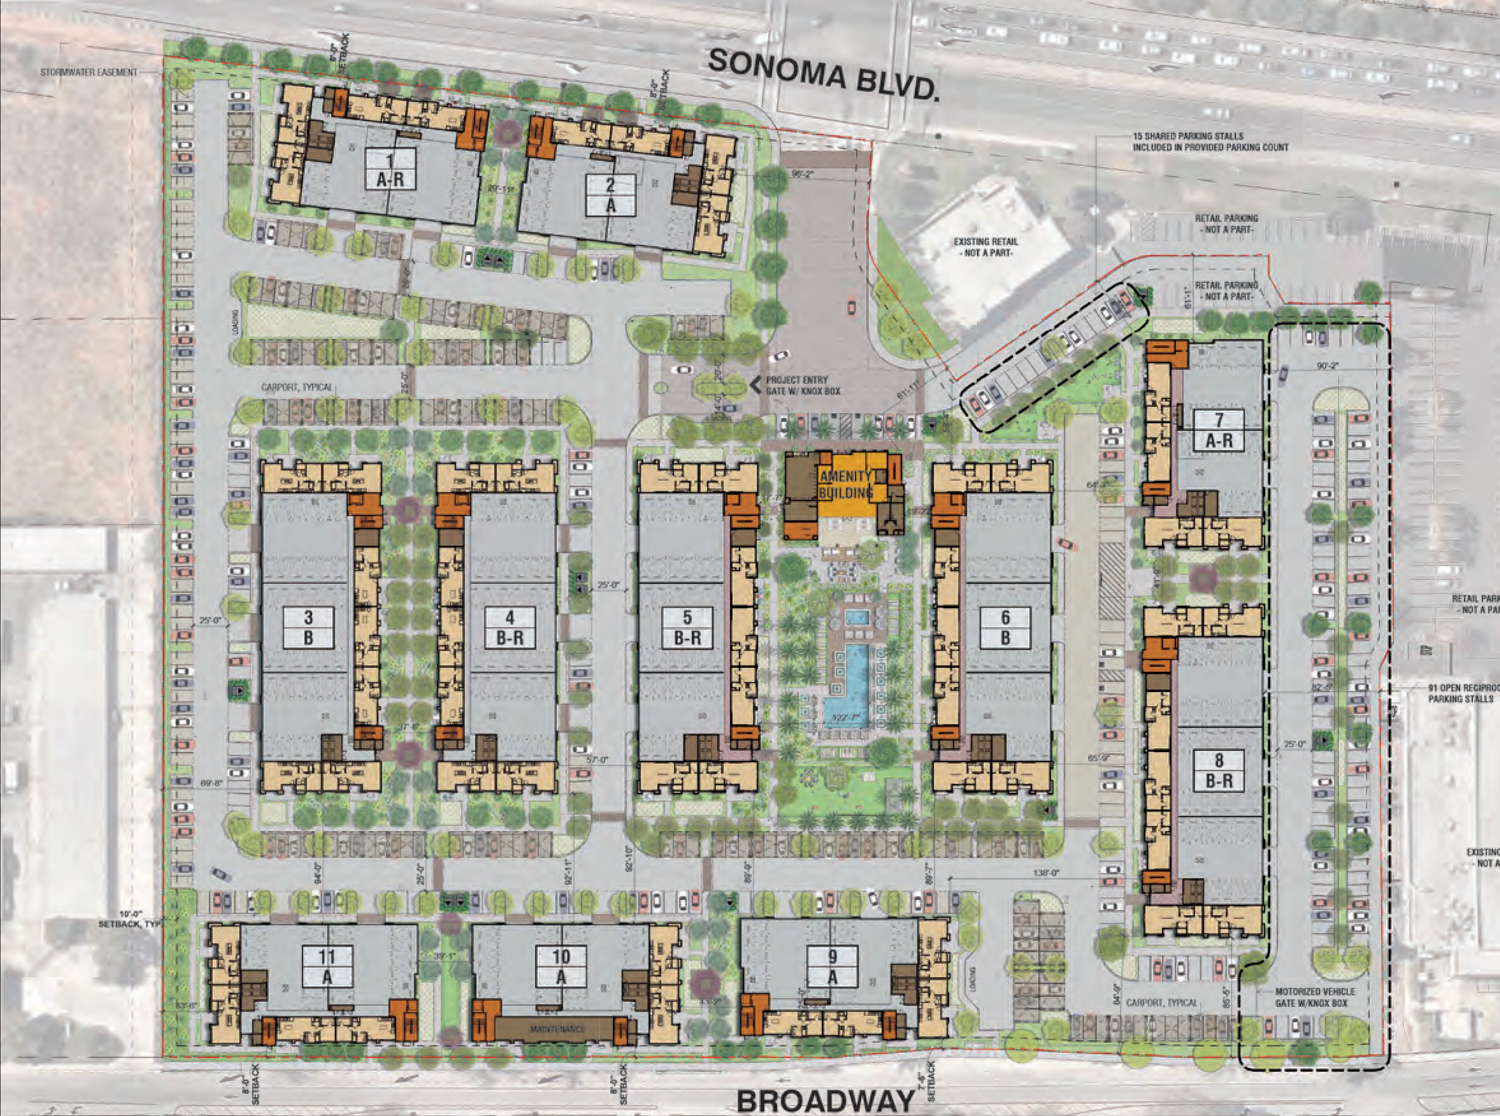 5180 Sonoma Boulevard site map, illustration by TCA